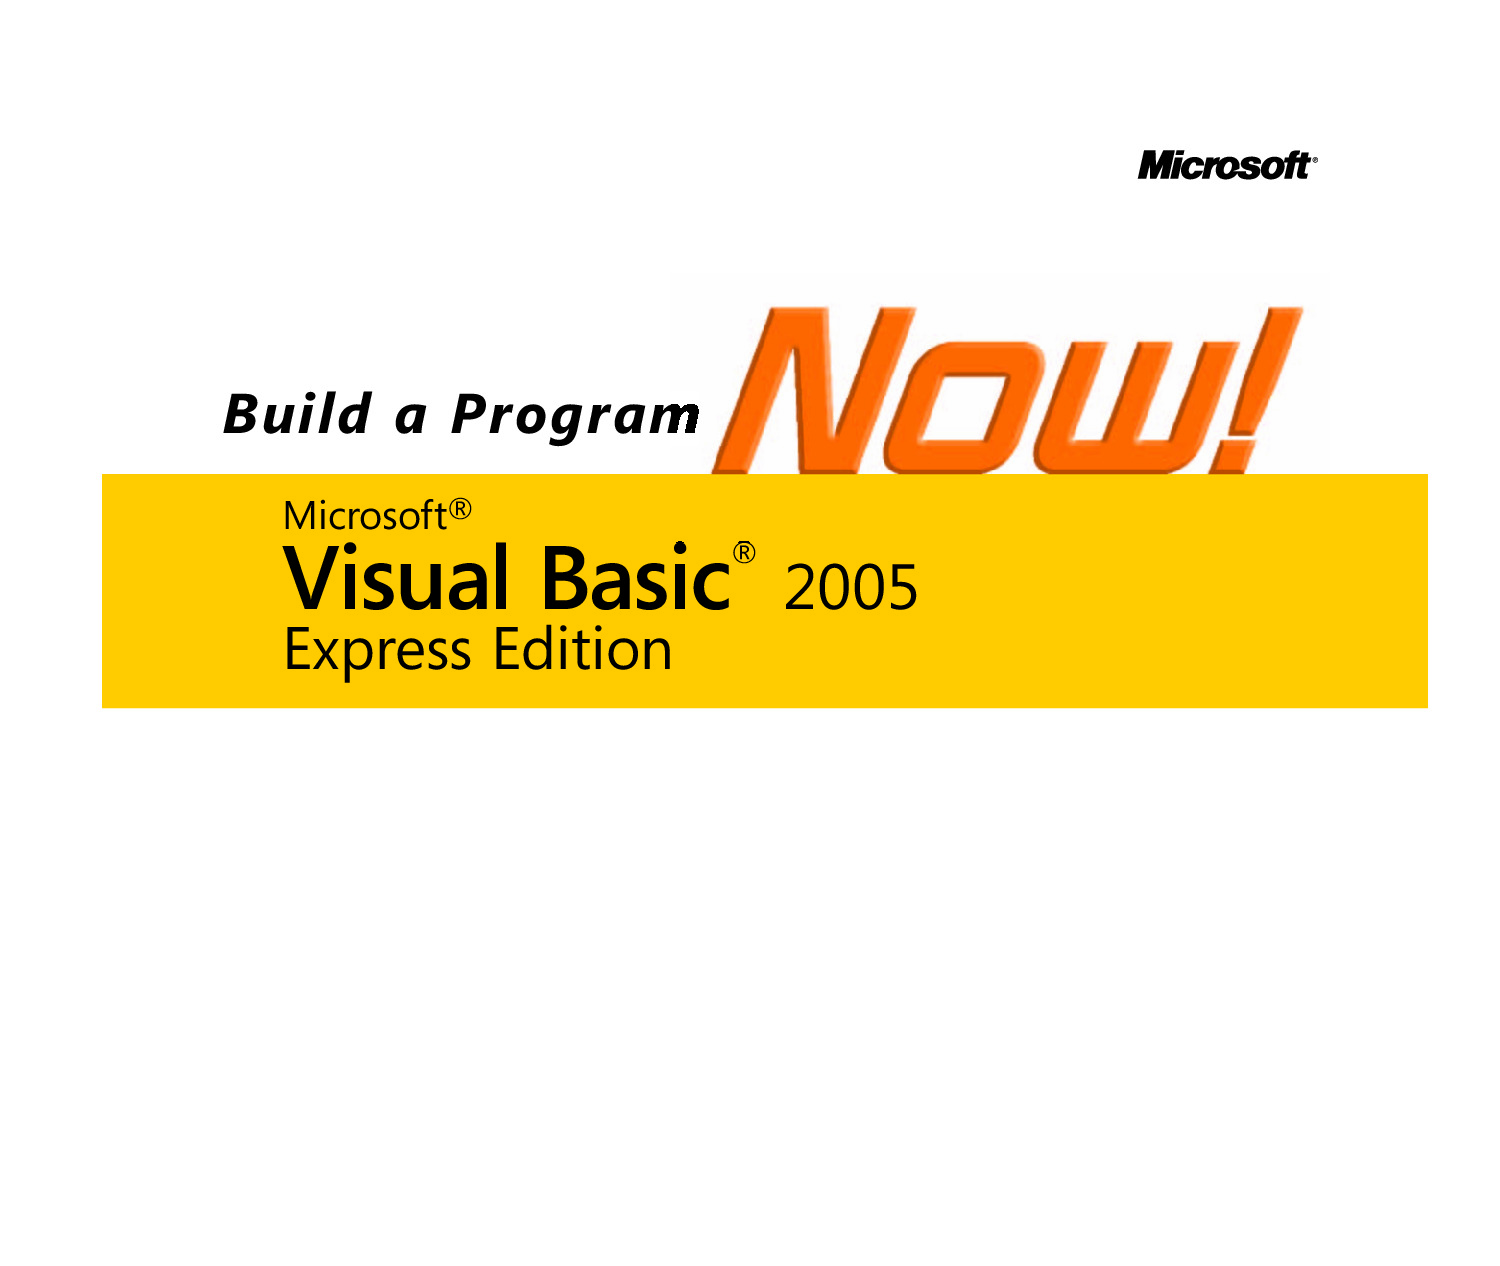 Microsoft Visual Basic 2005 Express Edition – Build a Program Now